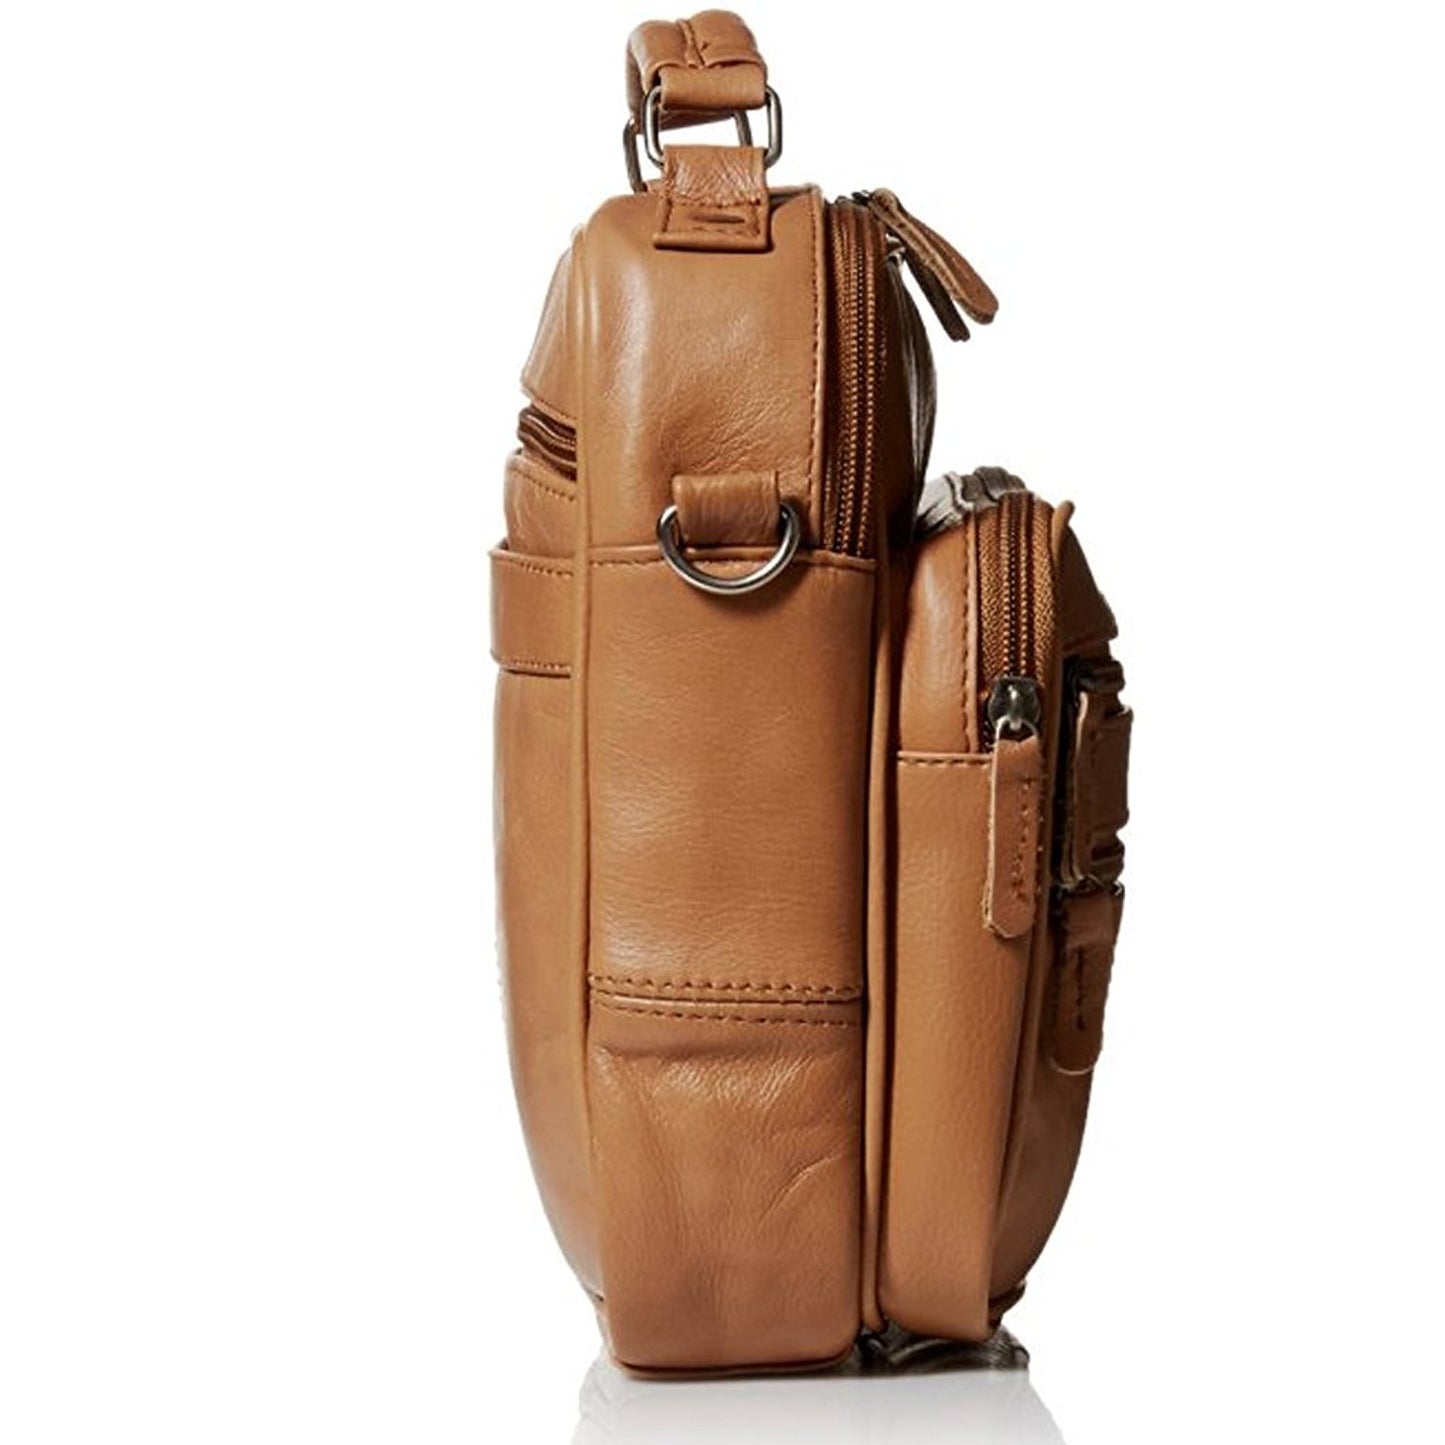 Roma Leathers Light Brown Leather Travel Organizer Crossbody Shoulder Bag